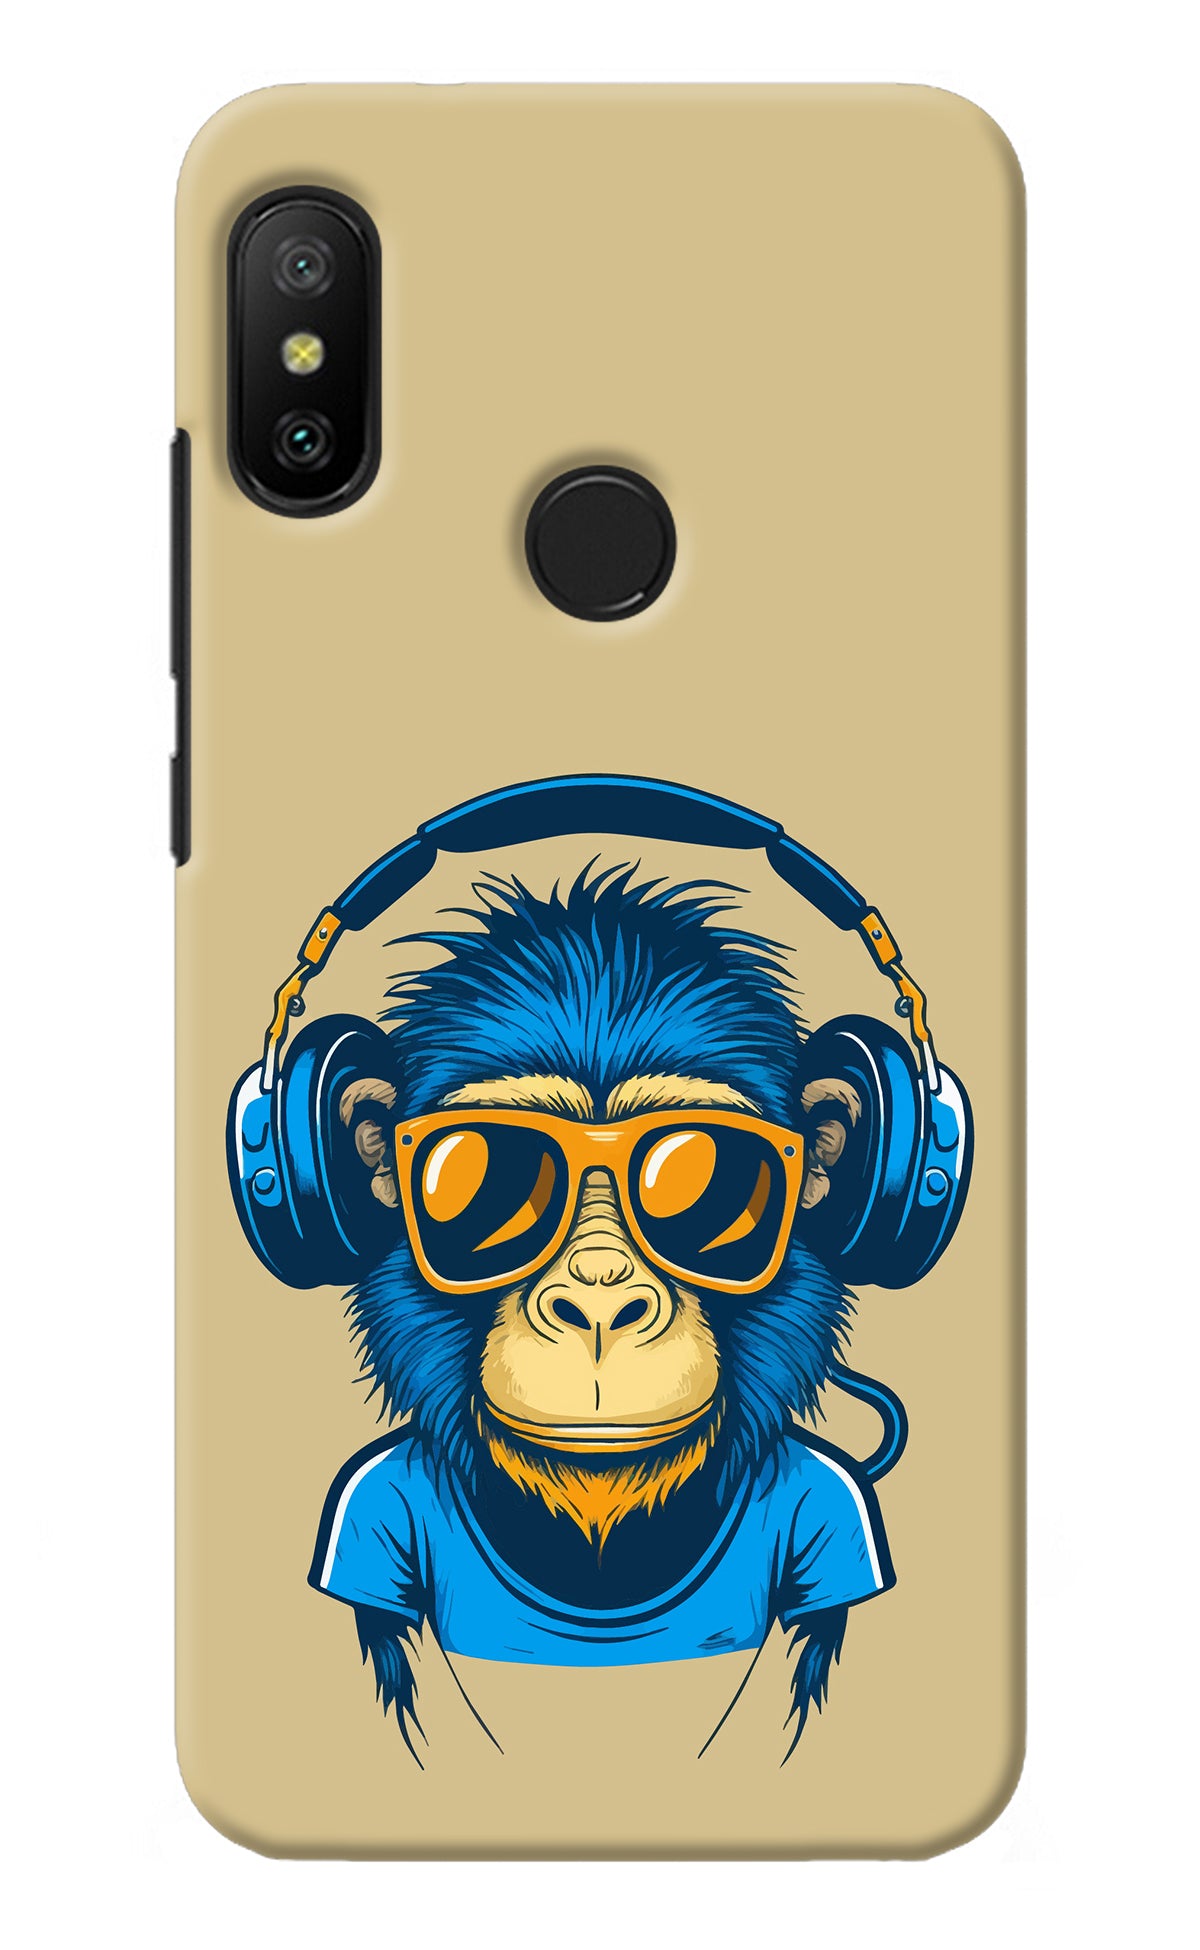 Monkey Headphone Redmi 6 Pro Back Cover